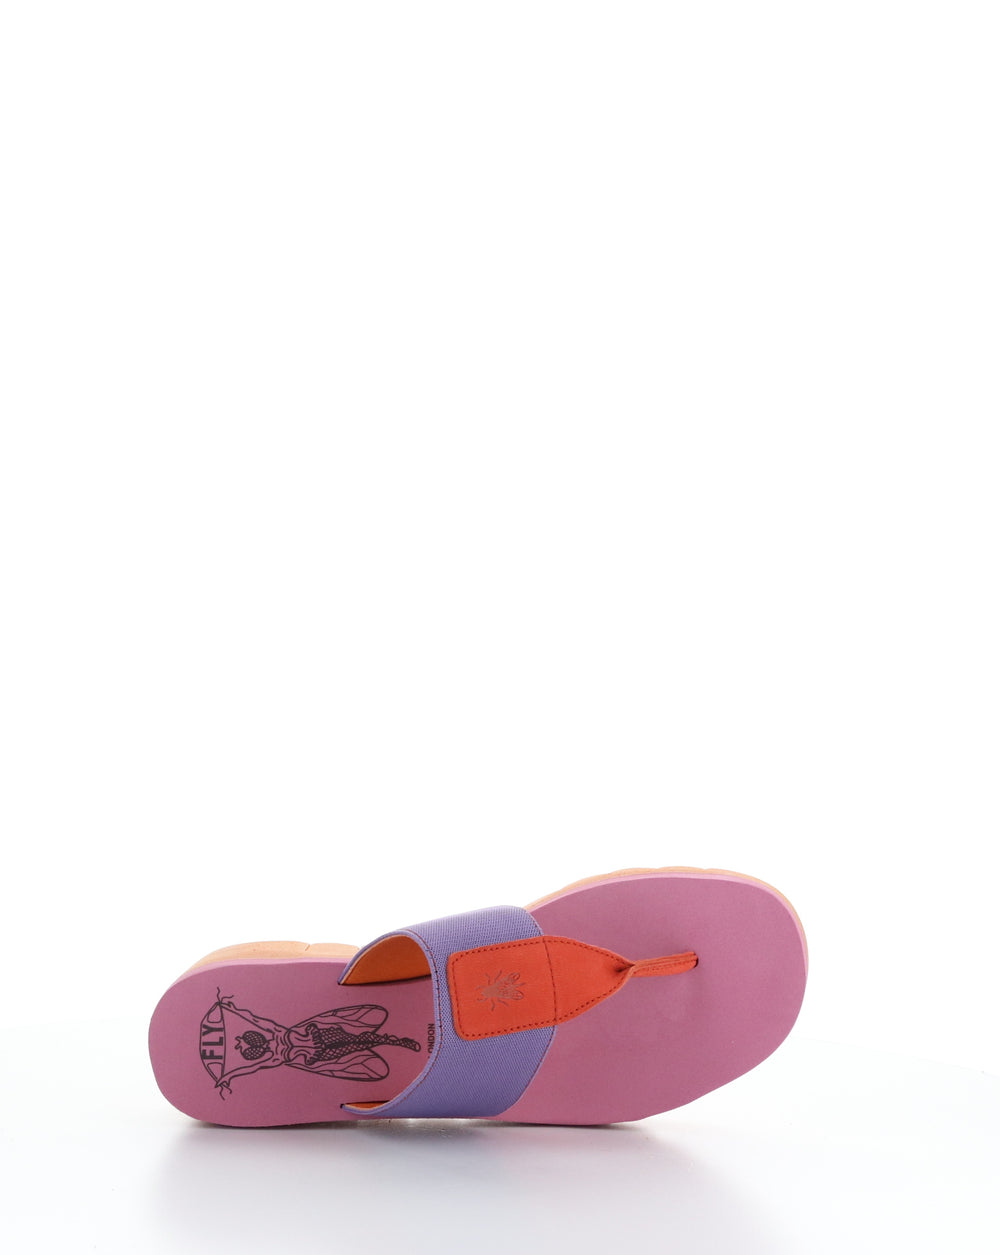 YOMU725FLY 008 RED/VIOLA Slip-on Sandals